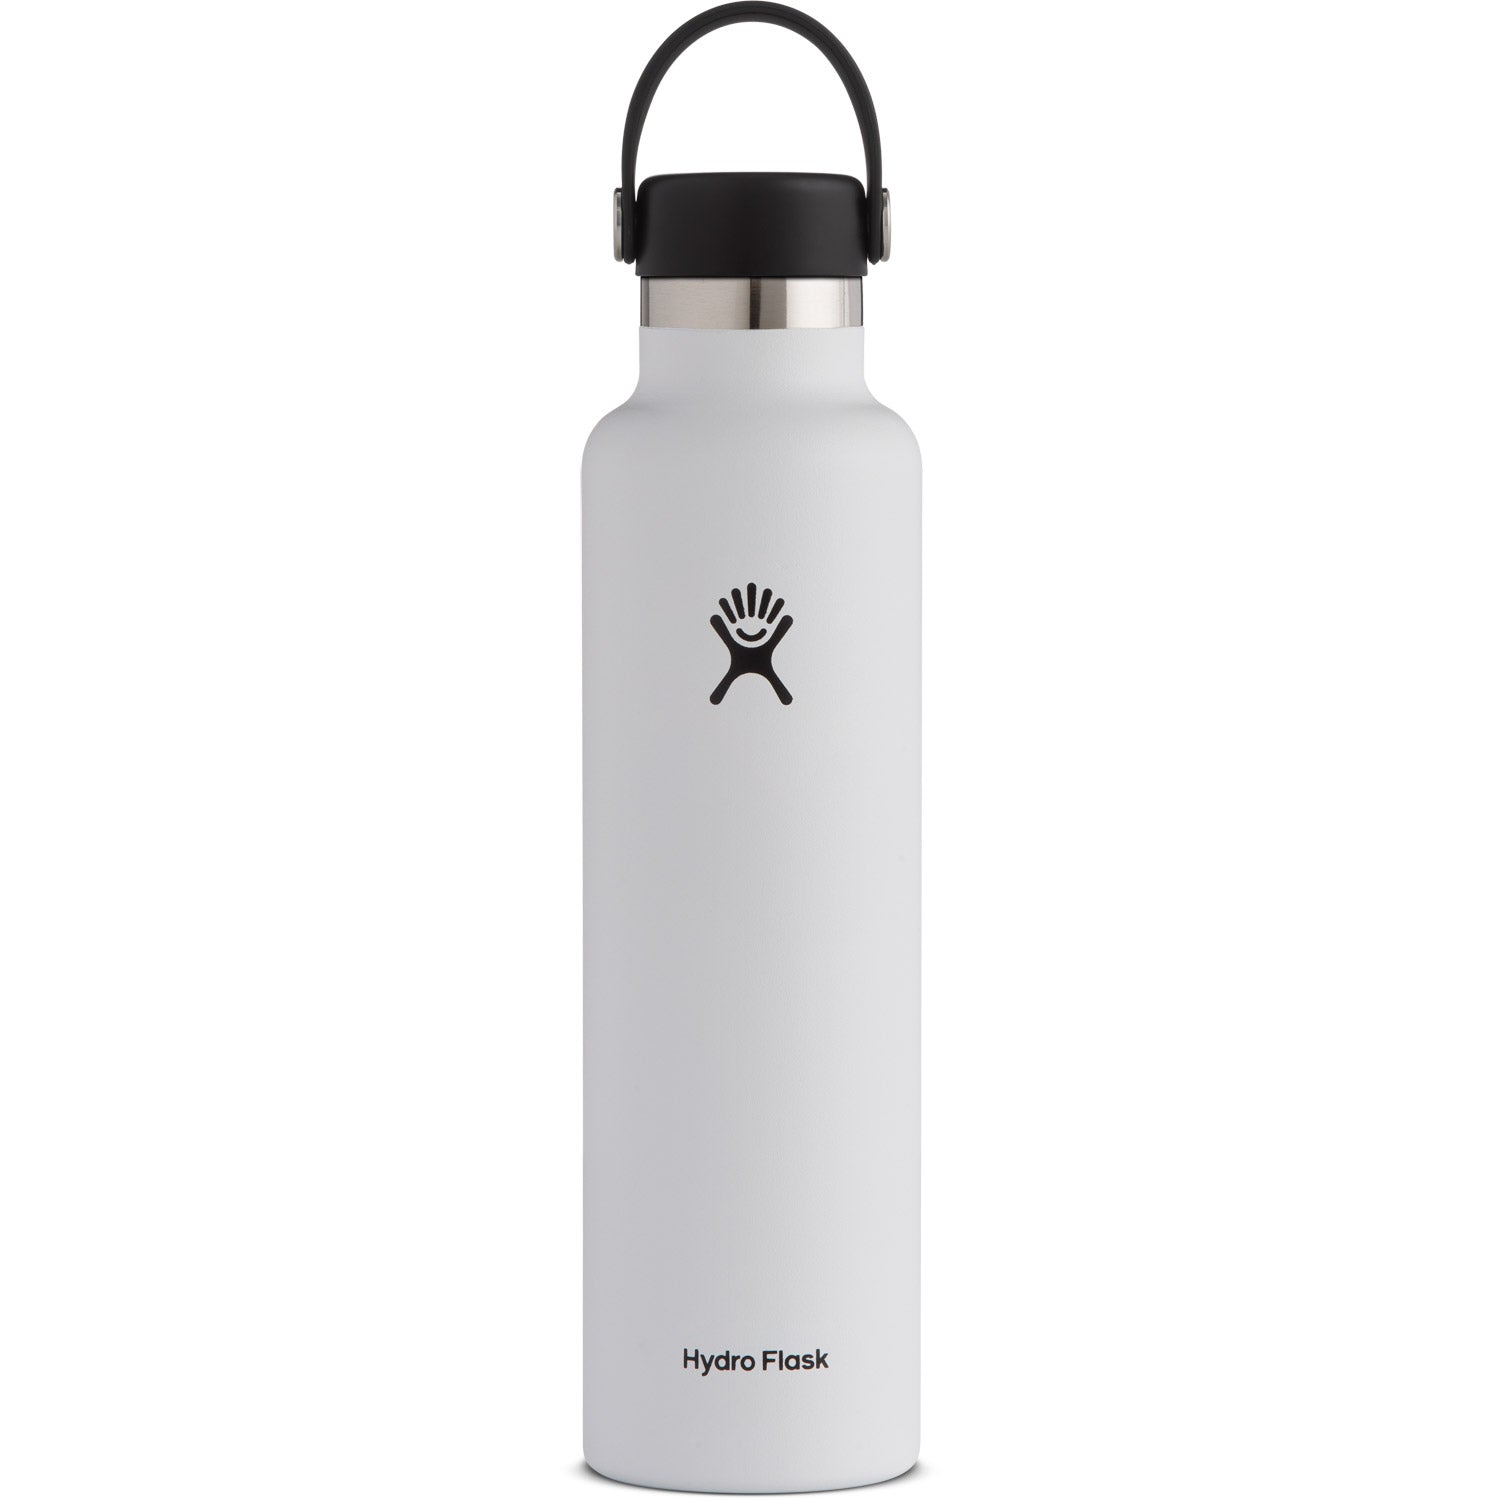 Hyrdo Flask Hydration 24oz Standard Mouth Insulated Bottle